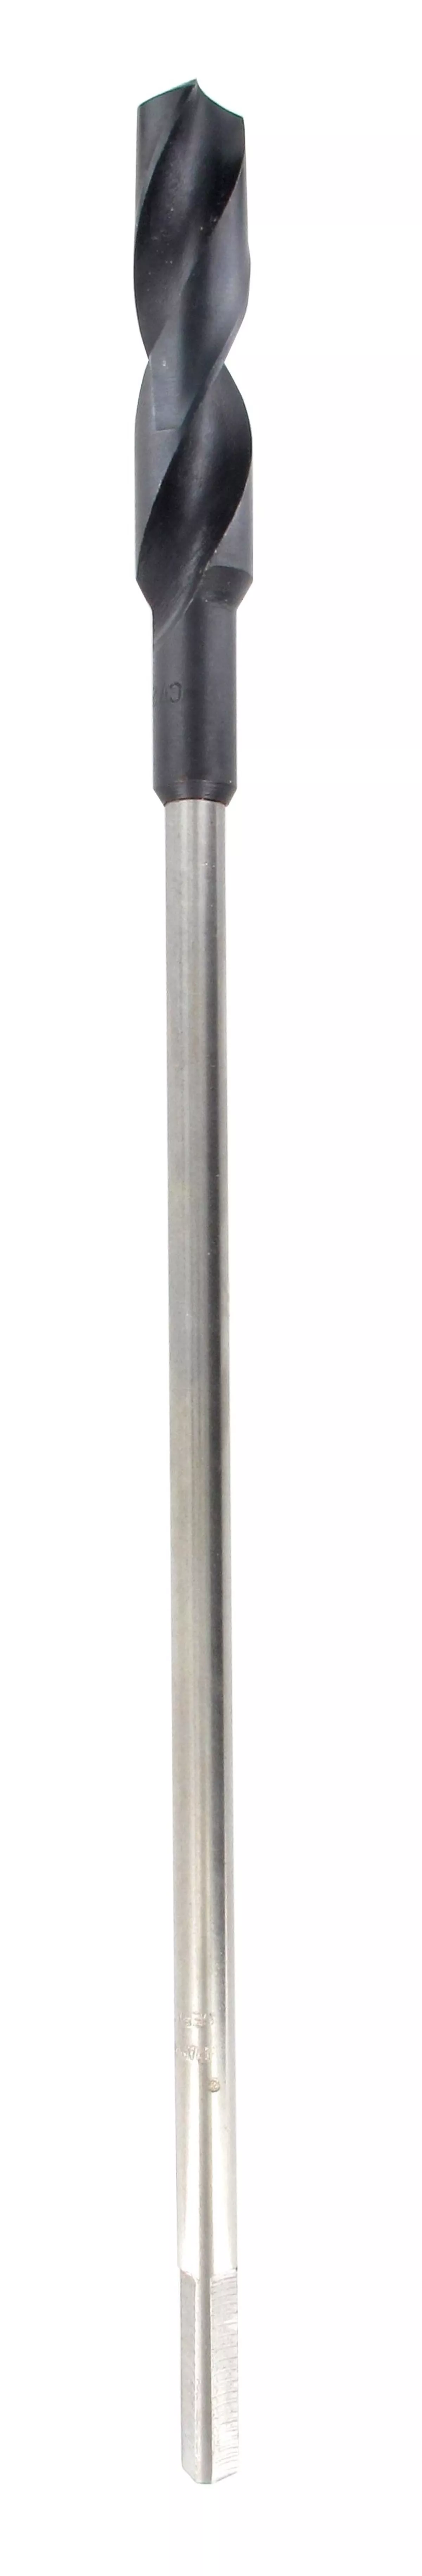 #3 - FAMAG forskallingsbor 1000mm  CV VS stål med rundt skaft 1001 (14,0mm)